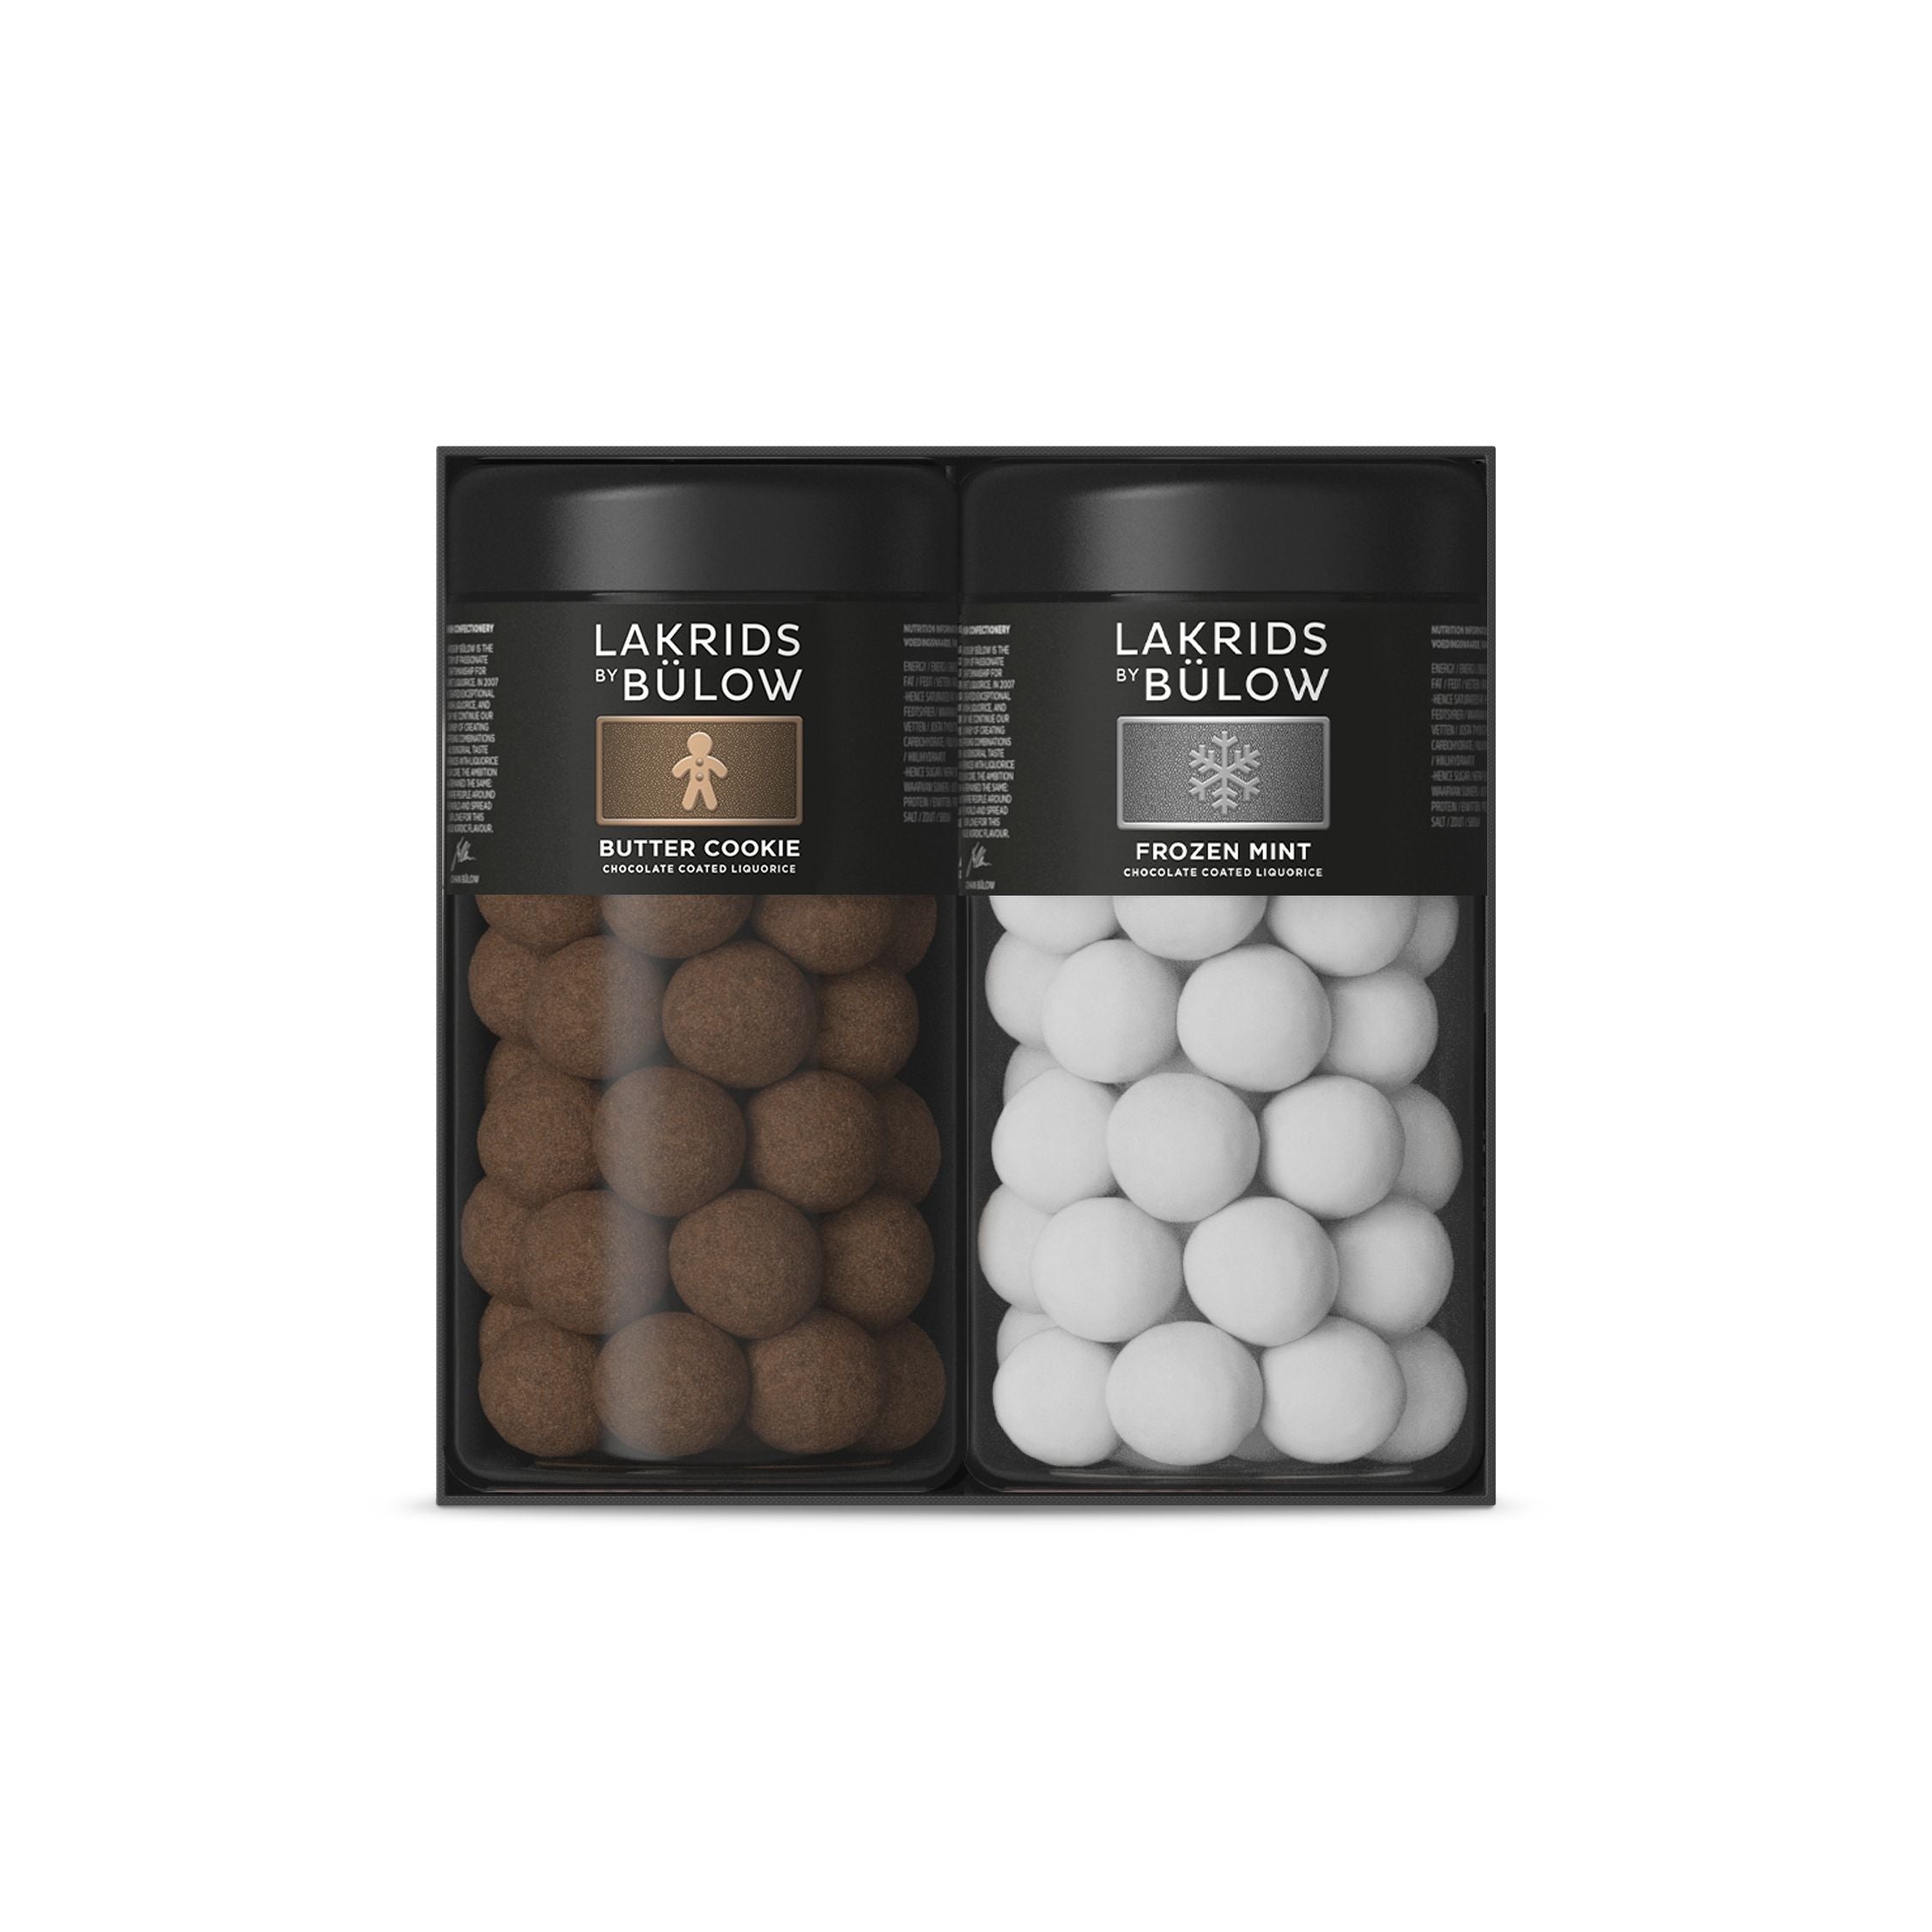 Lakrids by Bülow Black Box Butter Bookie / Frozen Mint, 590g